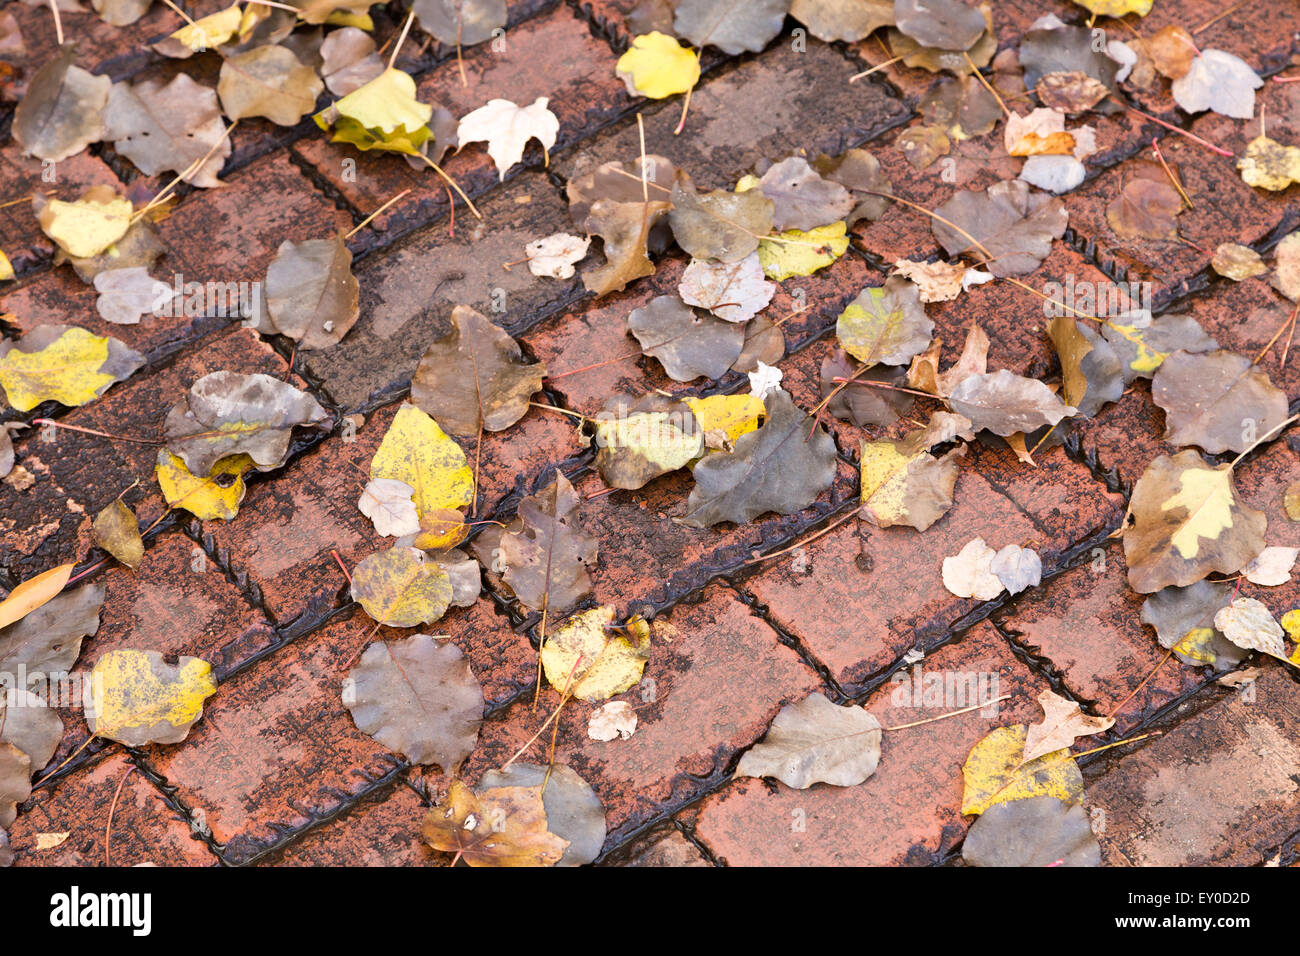 Wet leaves on brick side walk Stock Photo